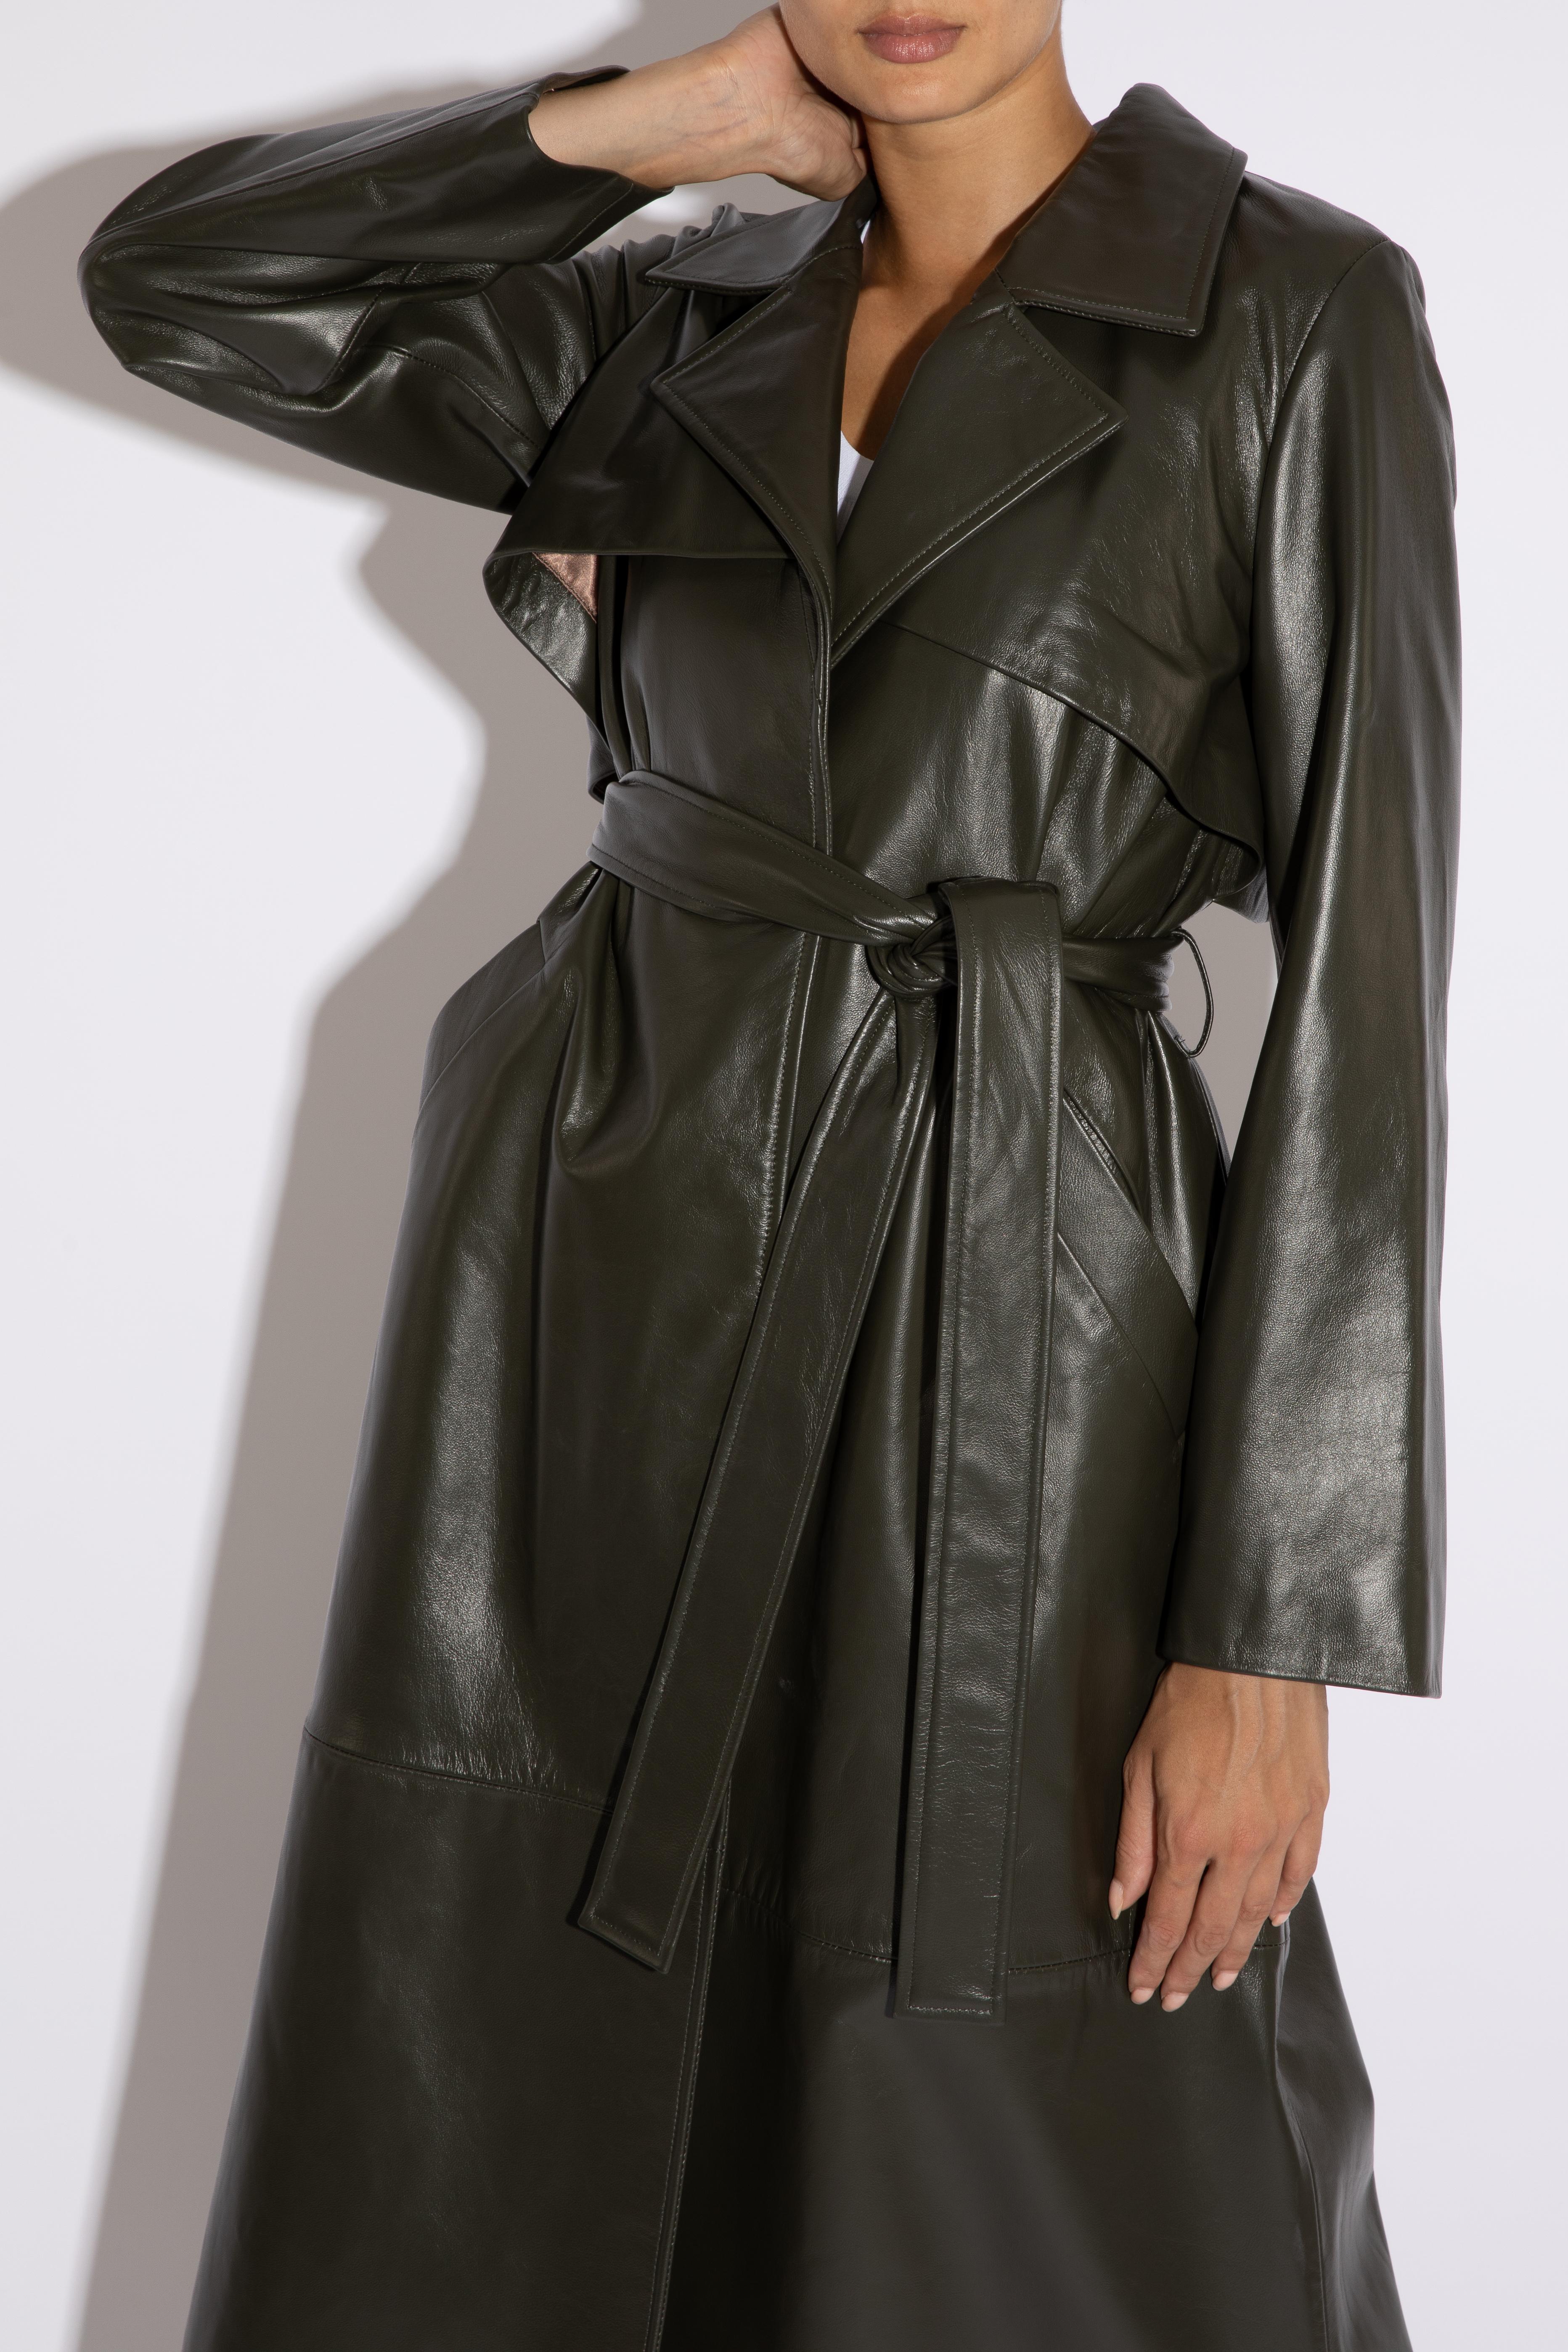 Verheyen London Leather Trench Coat in Dark Khaki Green - Size uk 8 For Sale 1